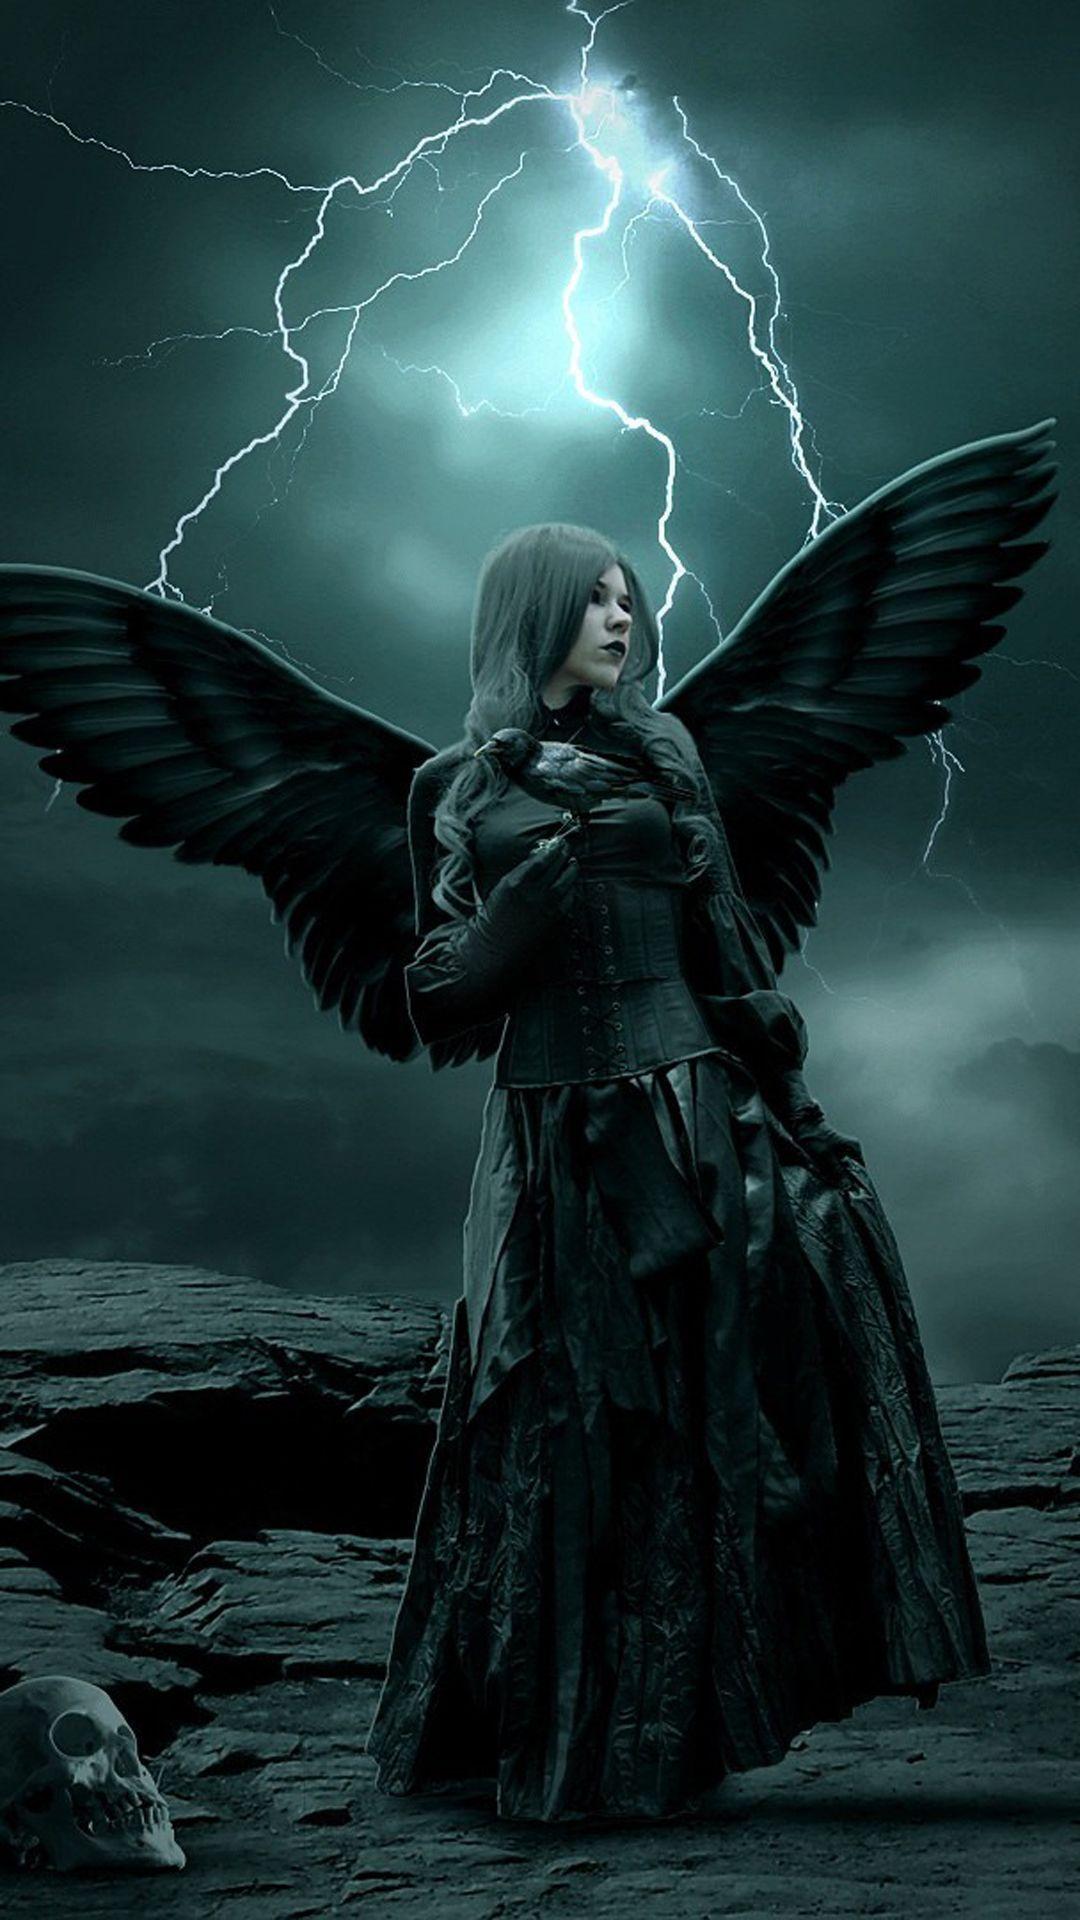 Goth angel Mobile Wallpaper 3963. Fallenangelts. Dark angel